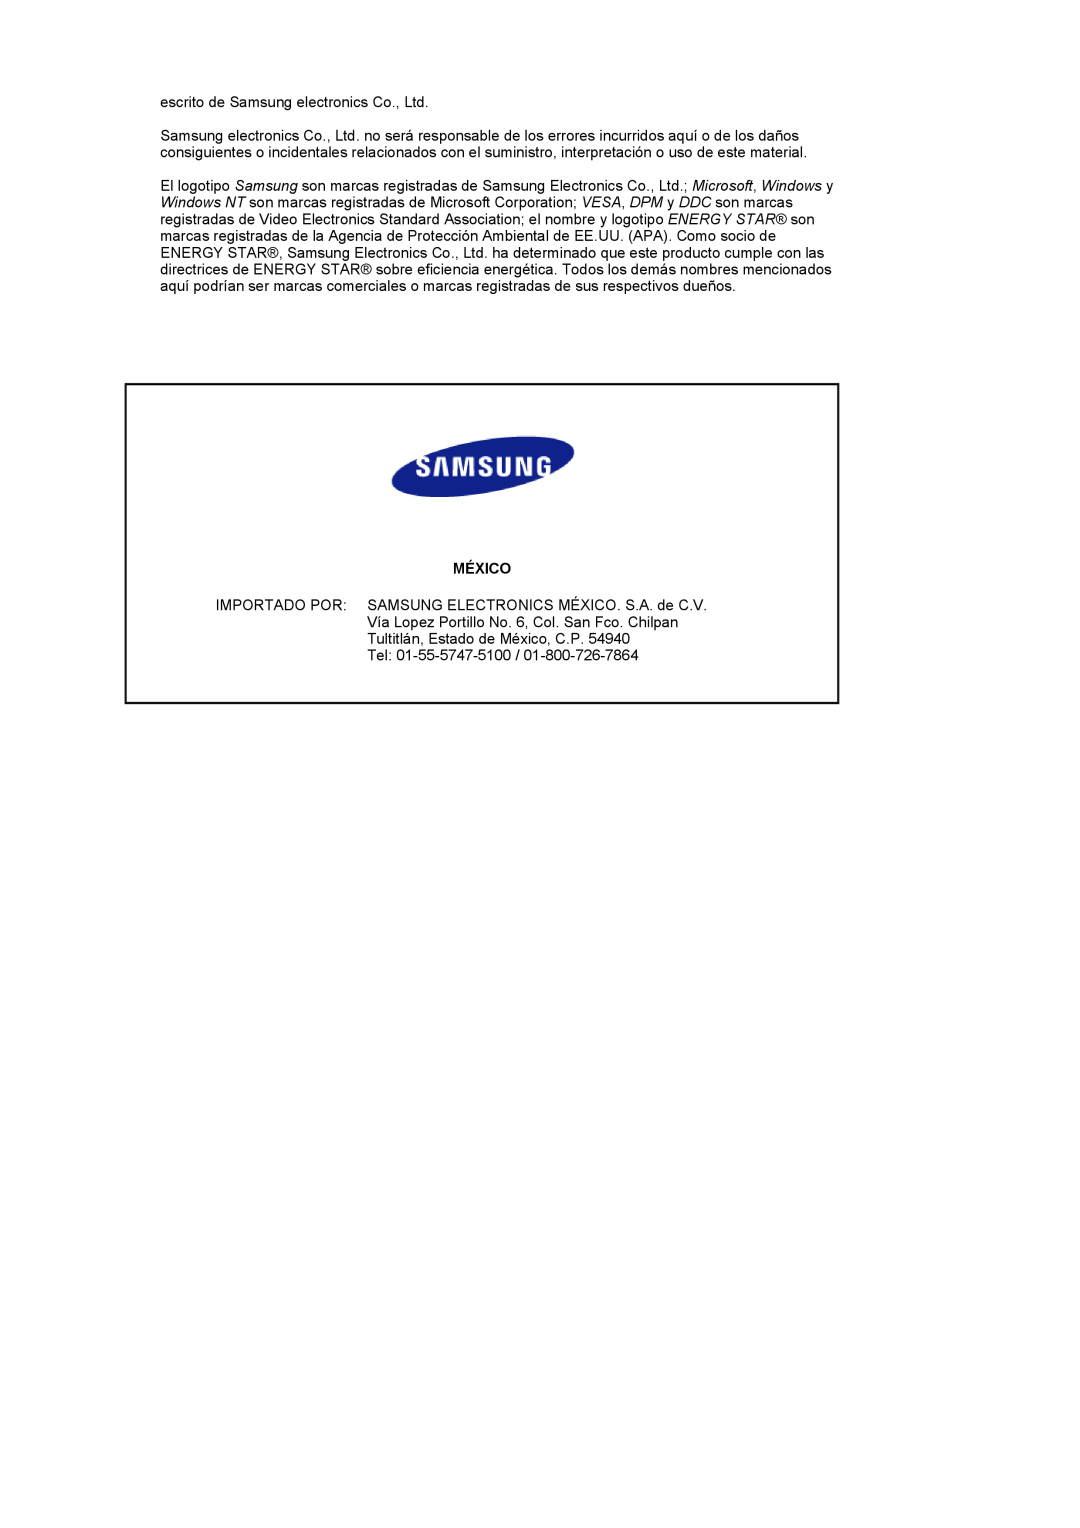 Samsung LS27HUBCB/EDC, LS27HUBCBS/EDC manual México, IMPORTADO POR SAMSUNG ELECTRONICS MÉXICO. S.A. de C.V 